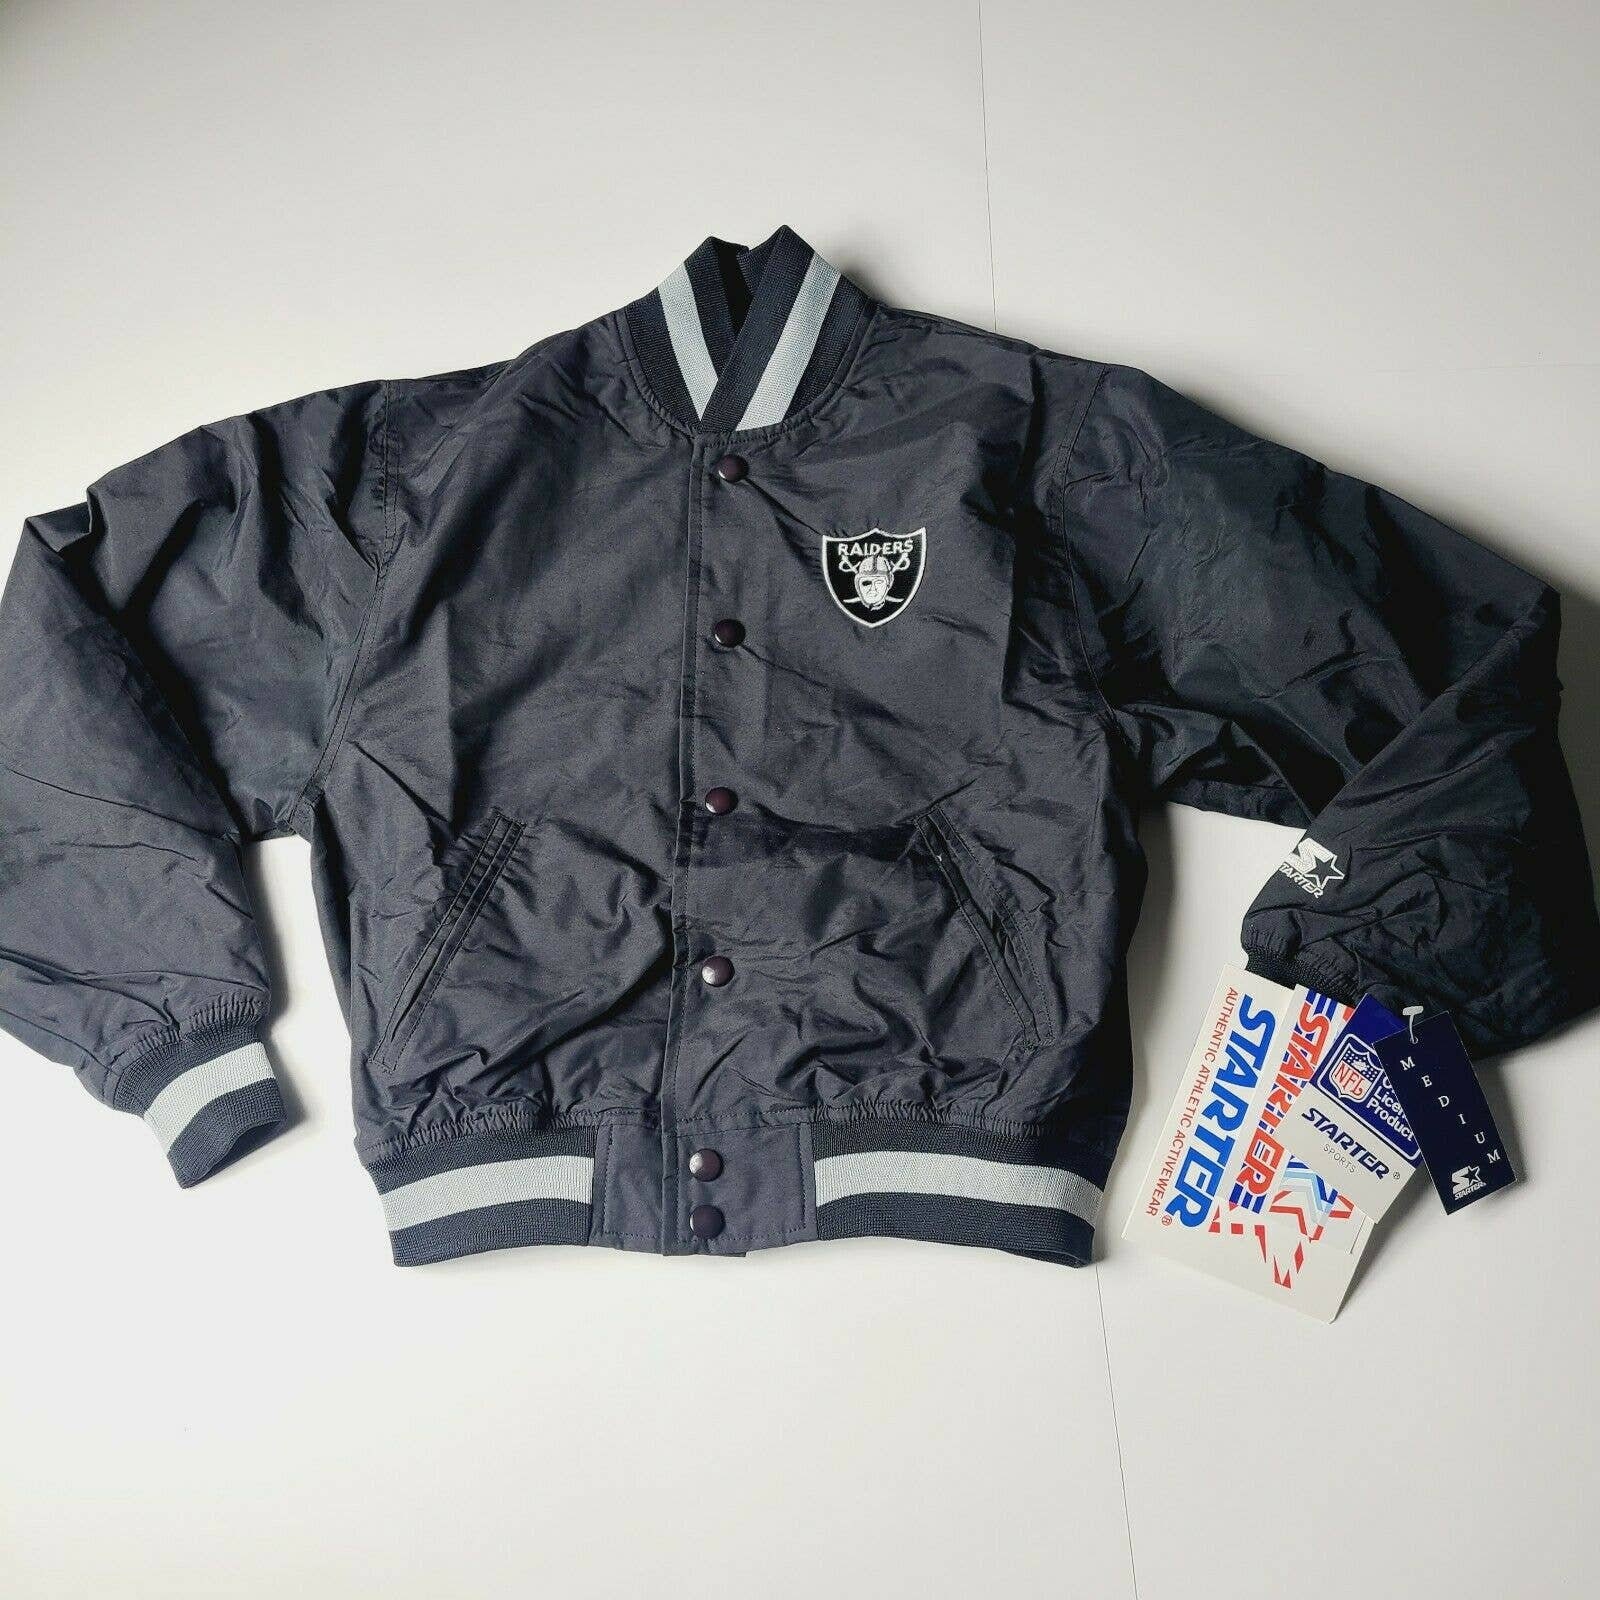 Oakland raiders jacket vintage - Gem